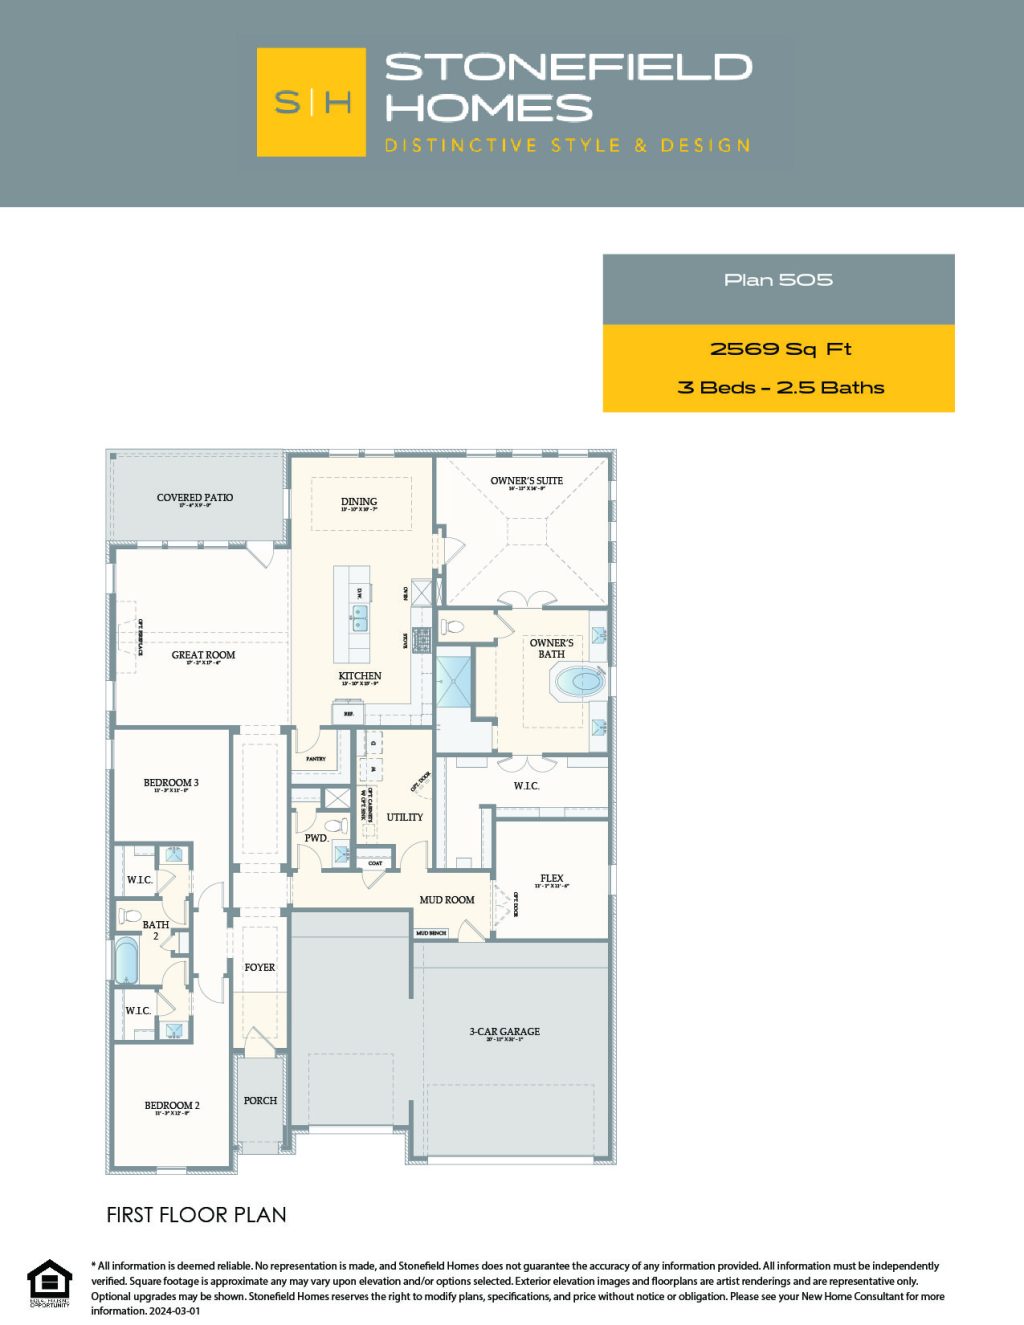 Santorini FL Plan - Single Story House Plans in Houston TX